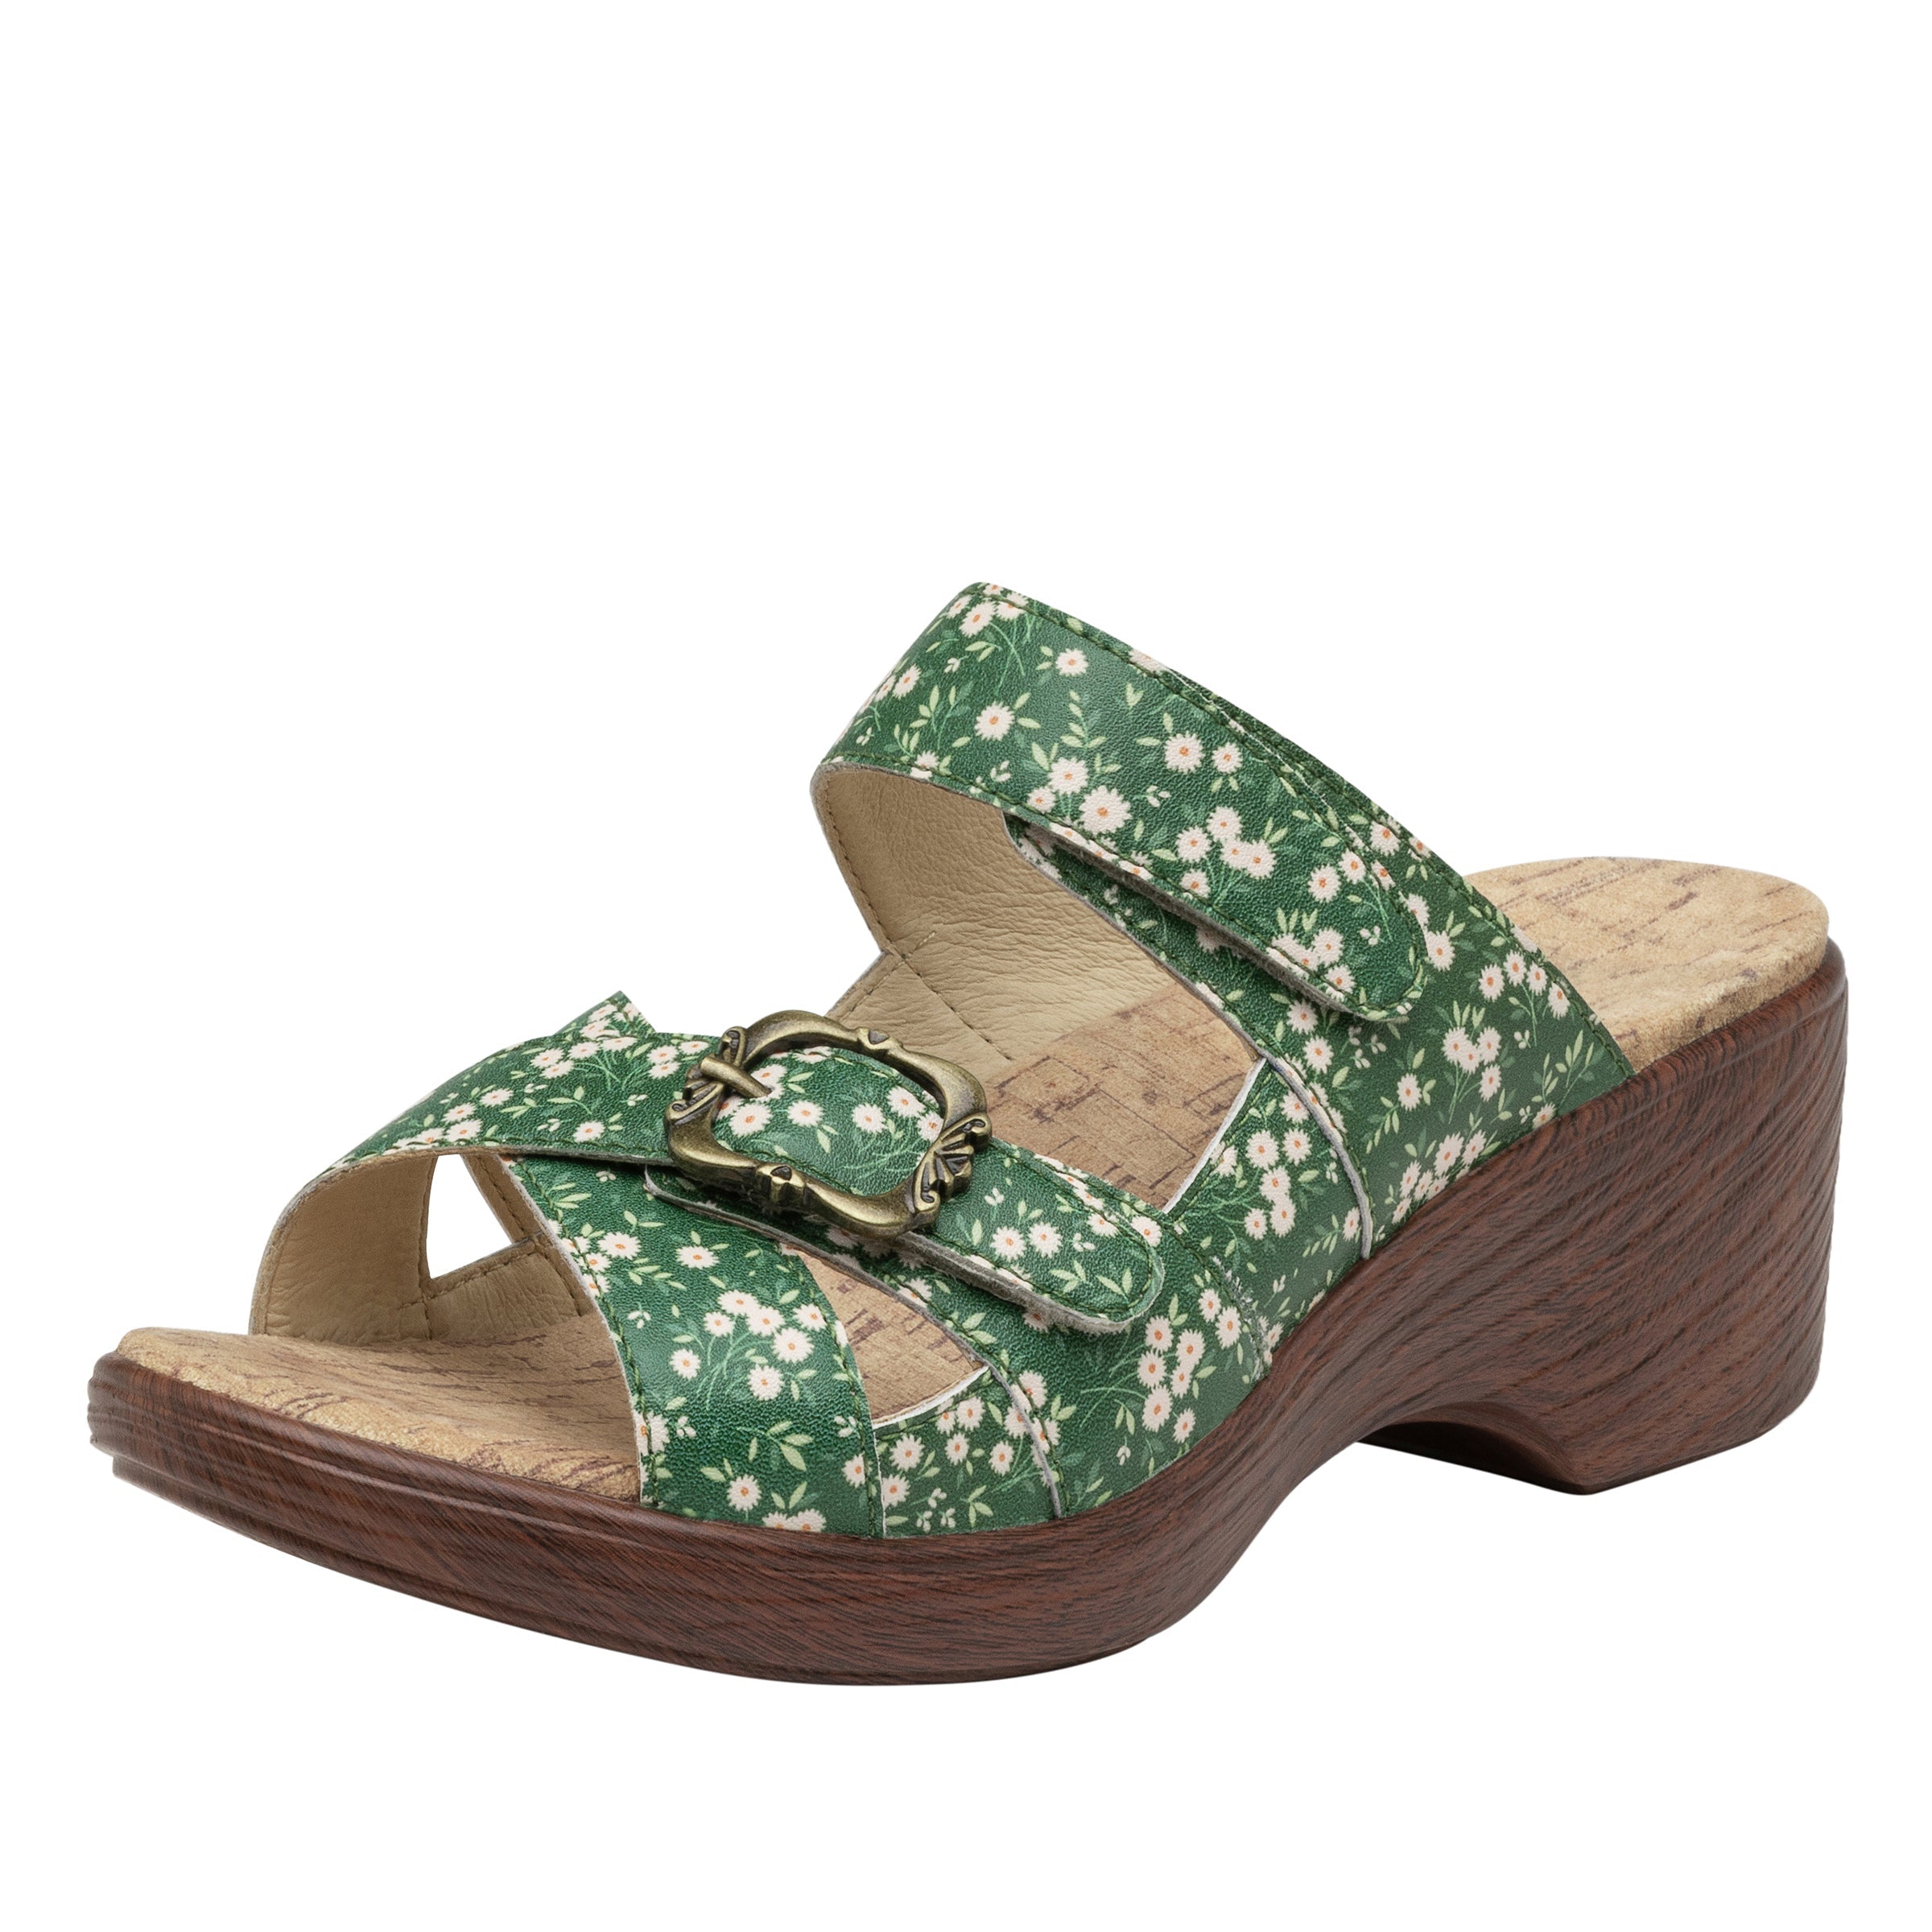 Sierra Green Acres Sandal - Alegria Shoes